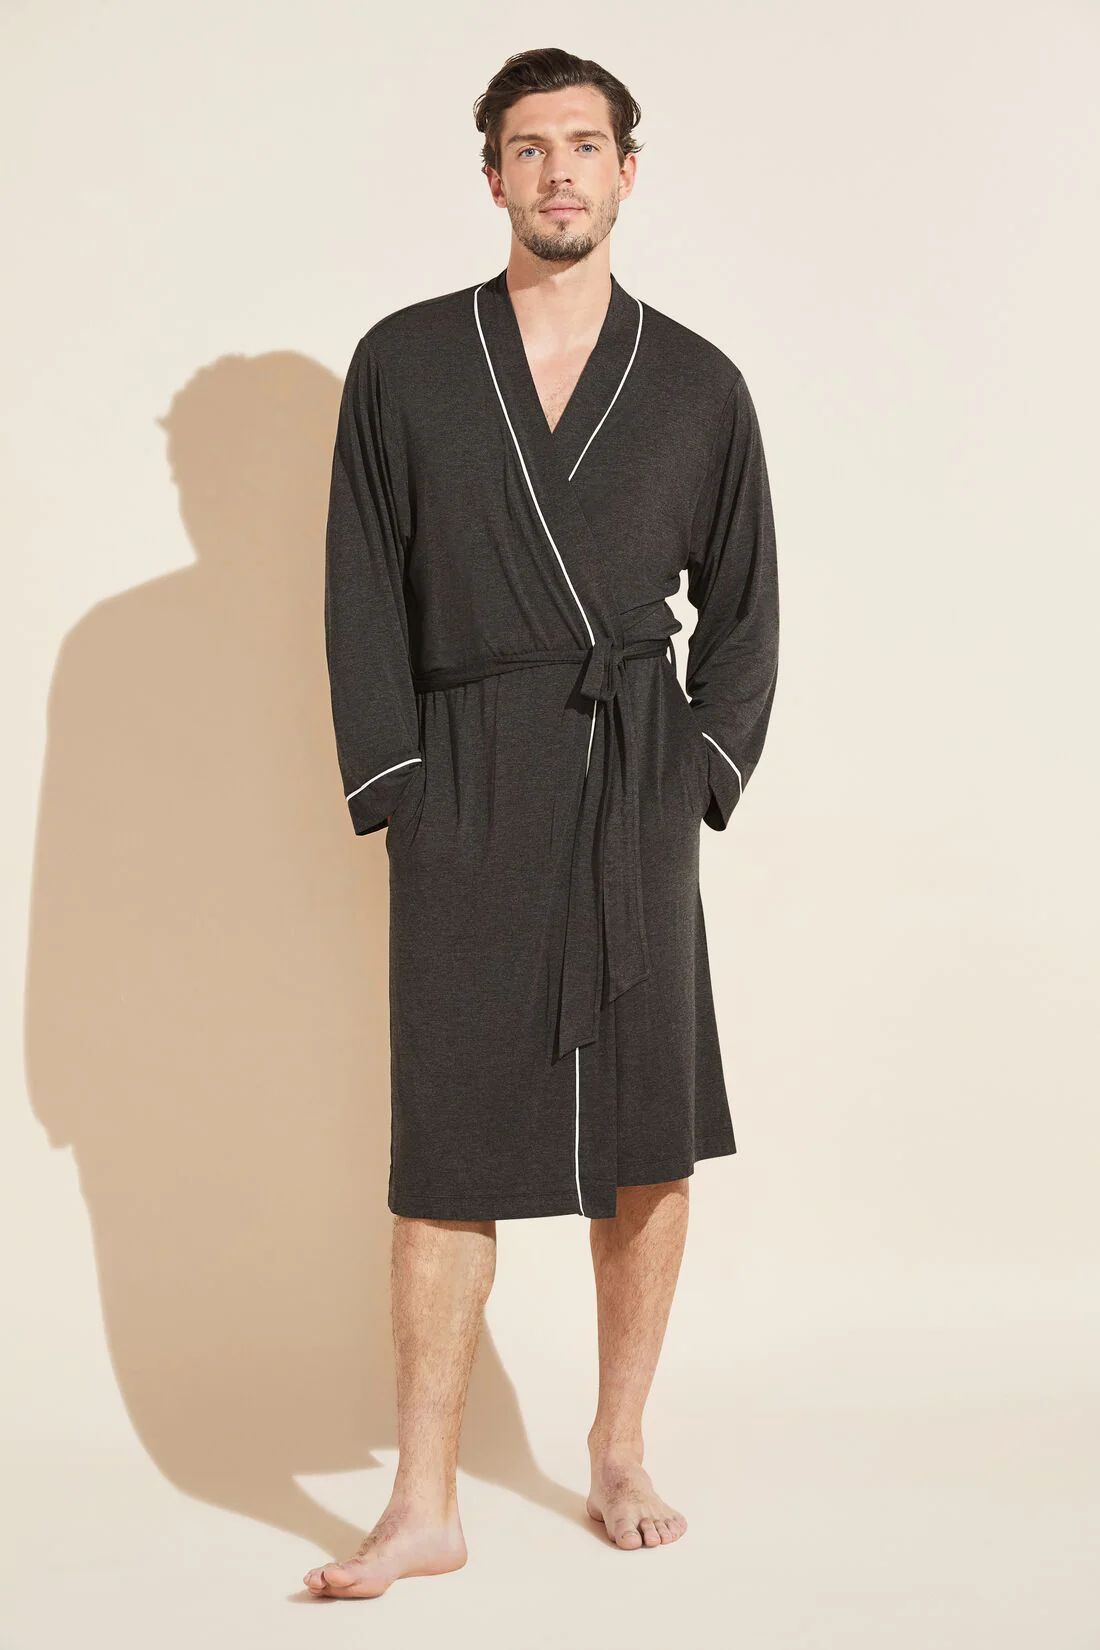 William TENCEL™ Modal Robe - Charcoal Heather/Ivory - Eberjey | Eberjey